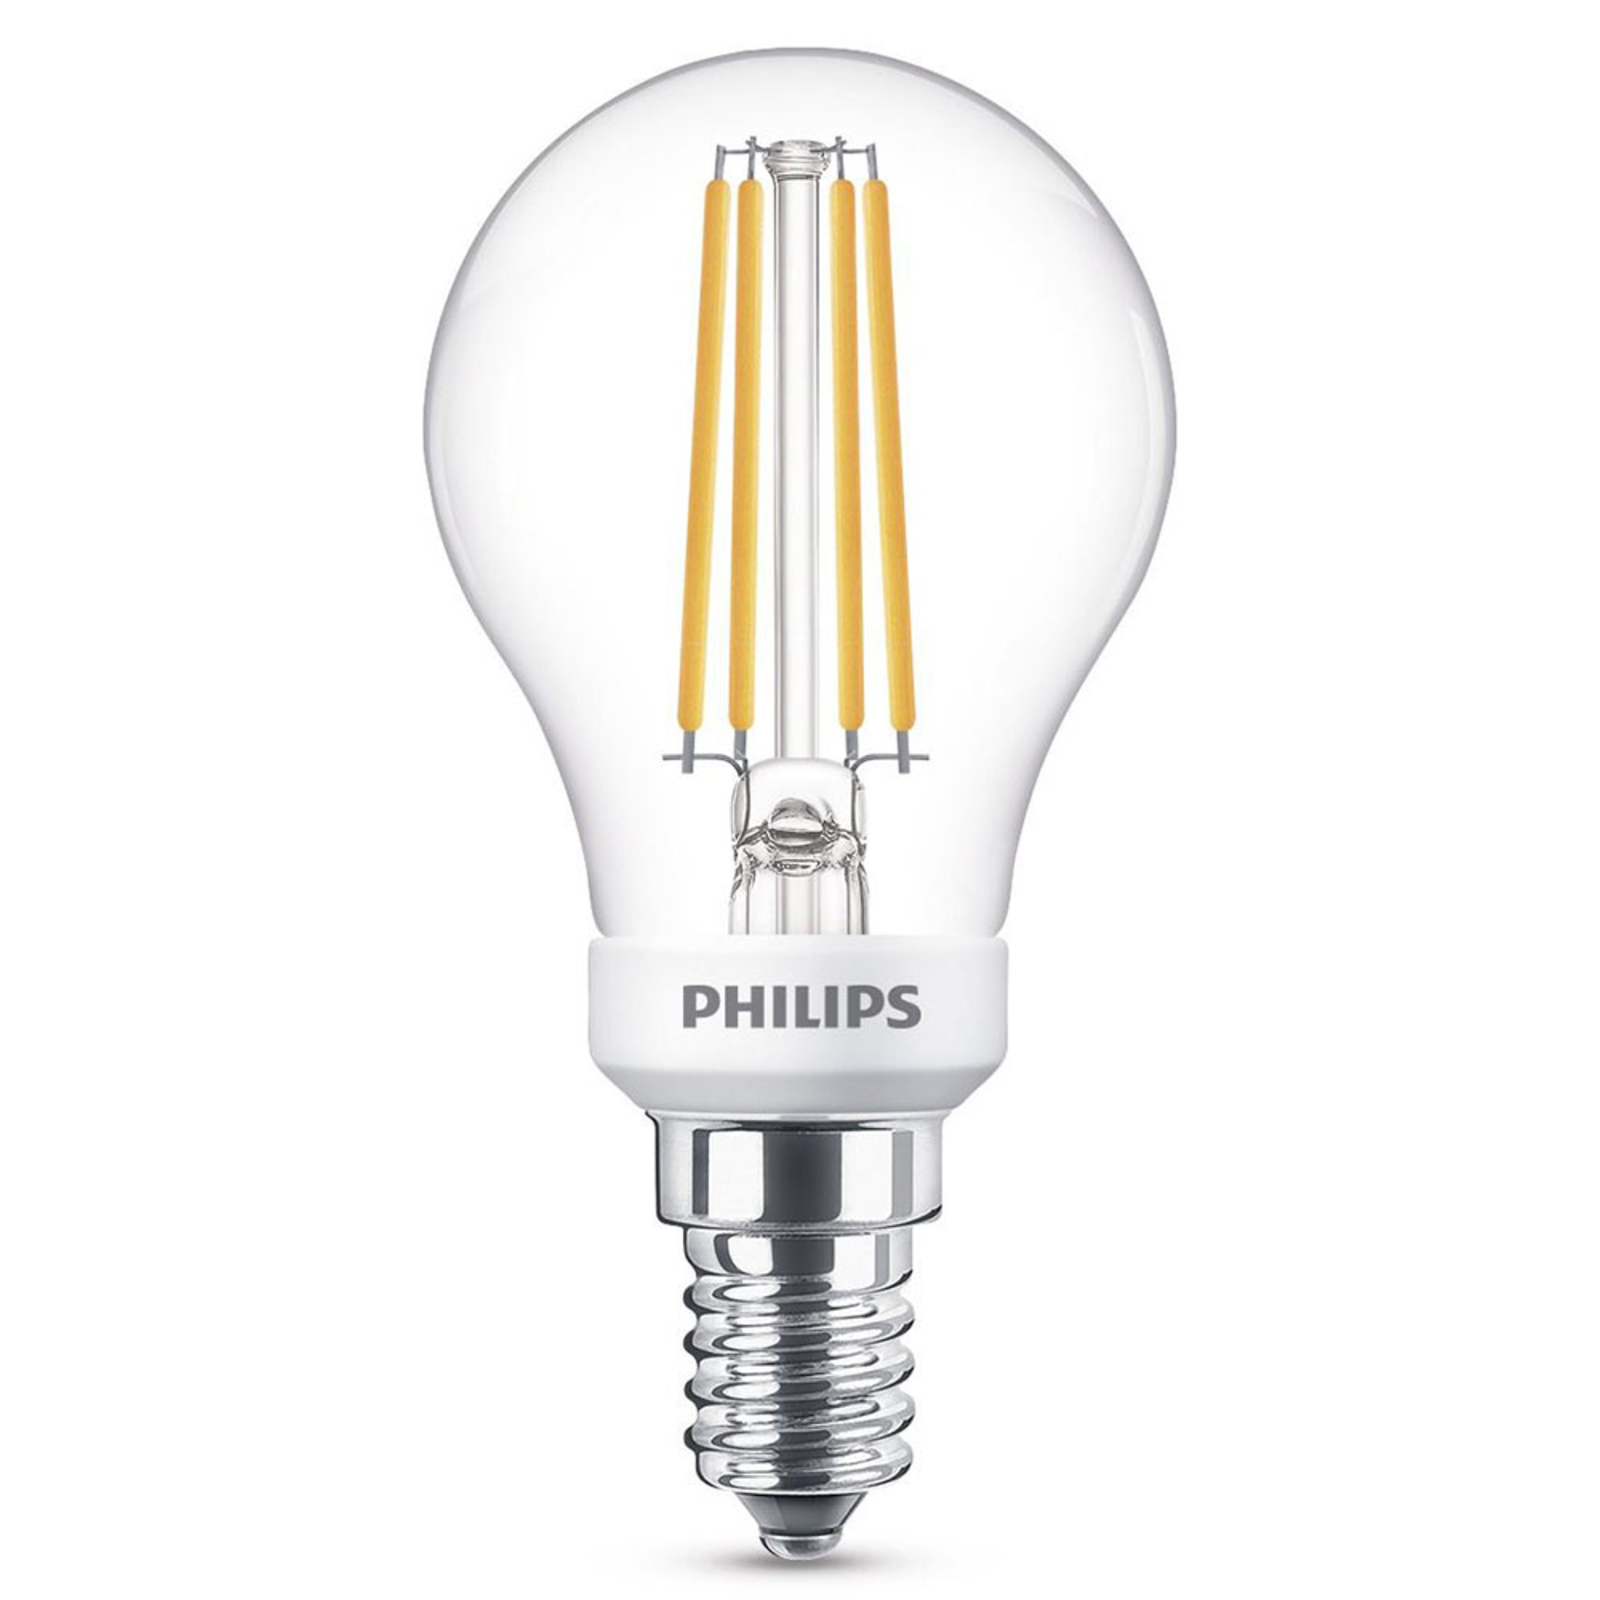 Philips LED 3.4W clear WarmGlow | Lights.co.uk